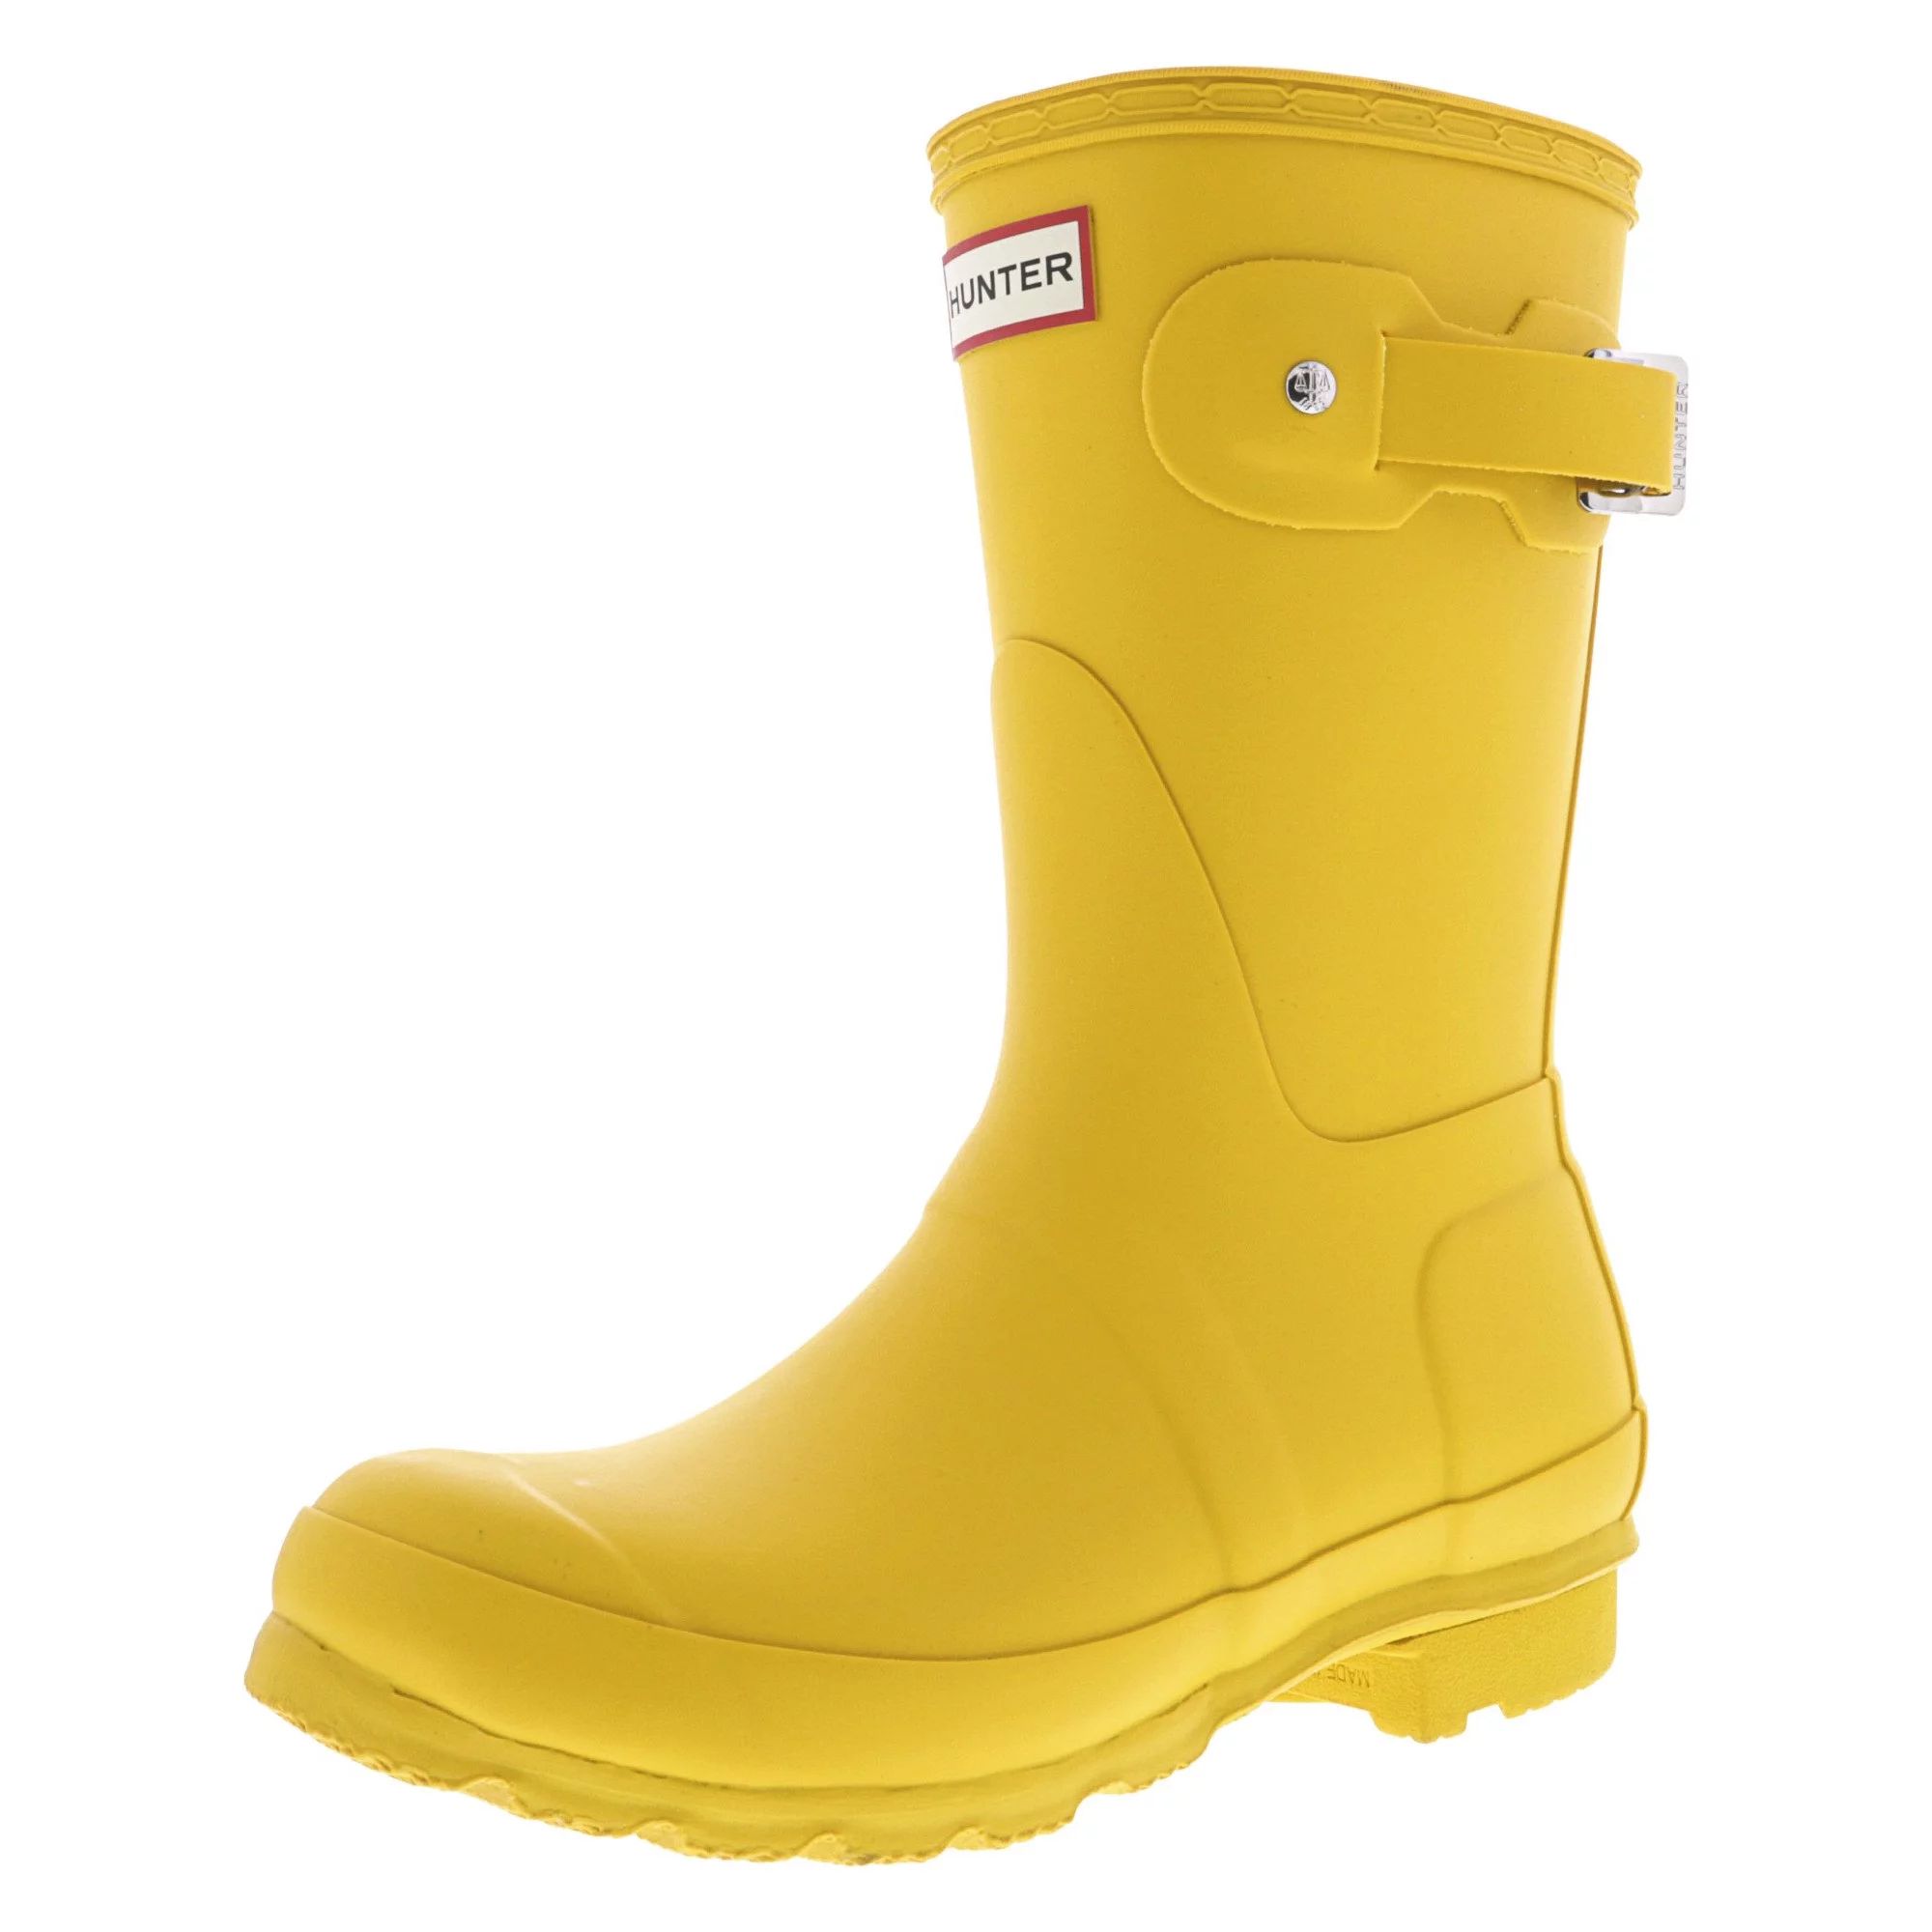 Hunter Women's Original Short Yellow Mid-Calf Rubber Rain Boot - 9M | Walmart (US)